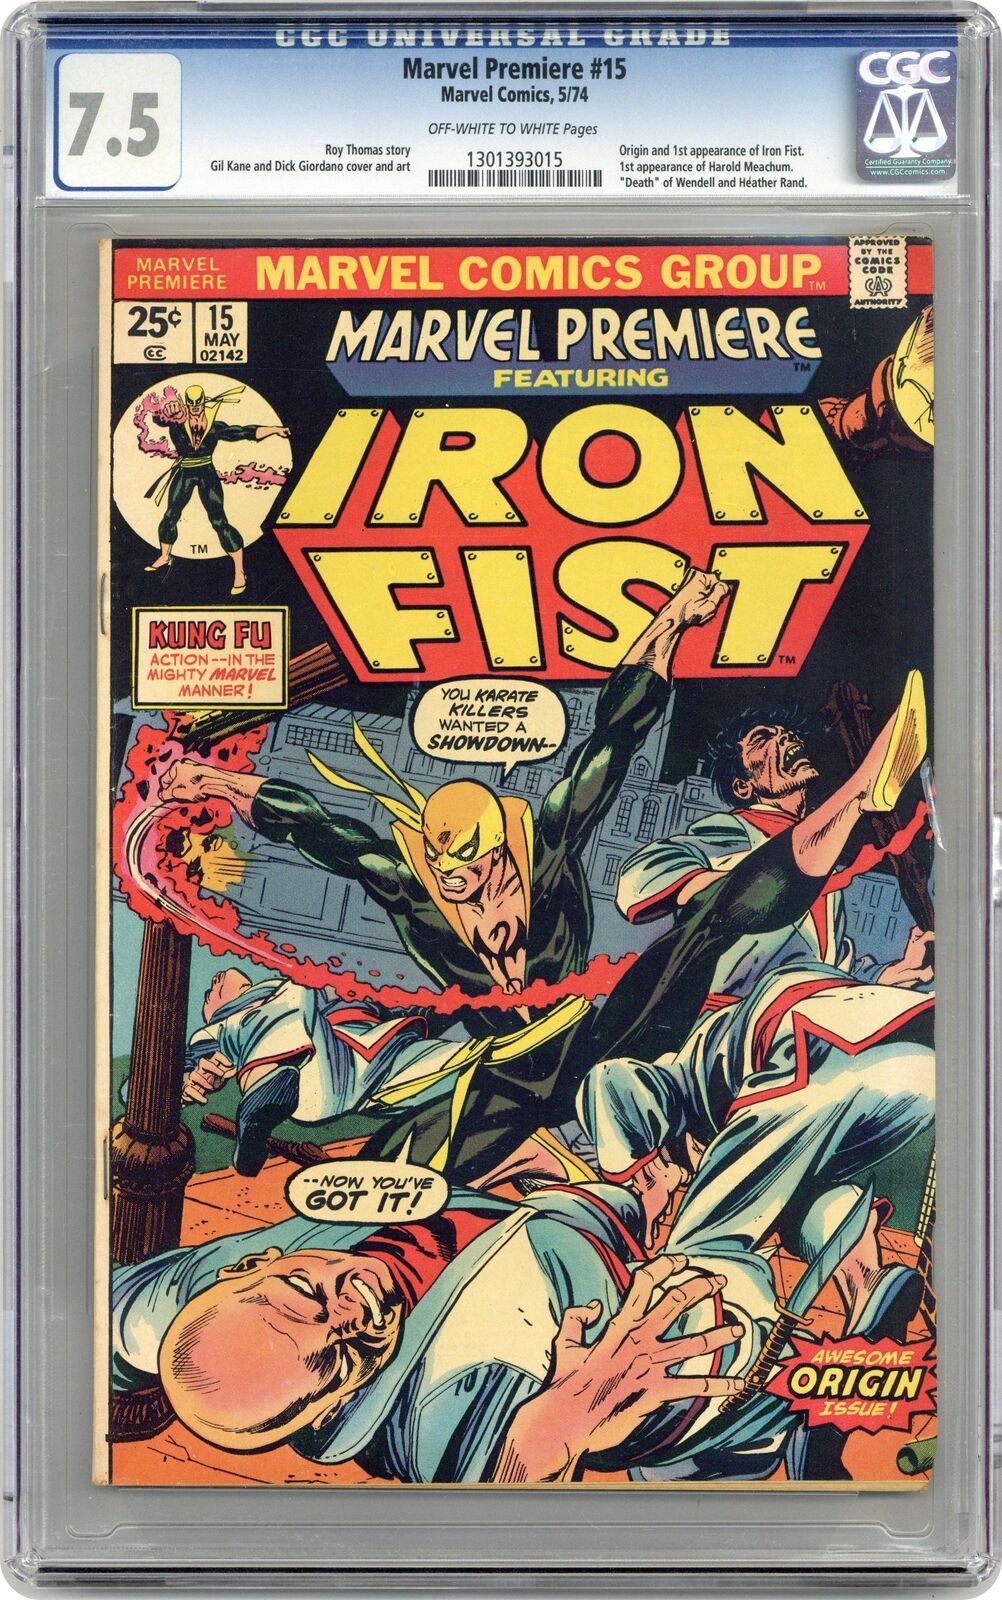 Marvel Premiere #15 CGC 7.5 1974 1301393015 1st app. and origin Iron Fist